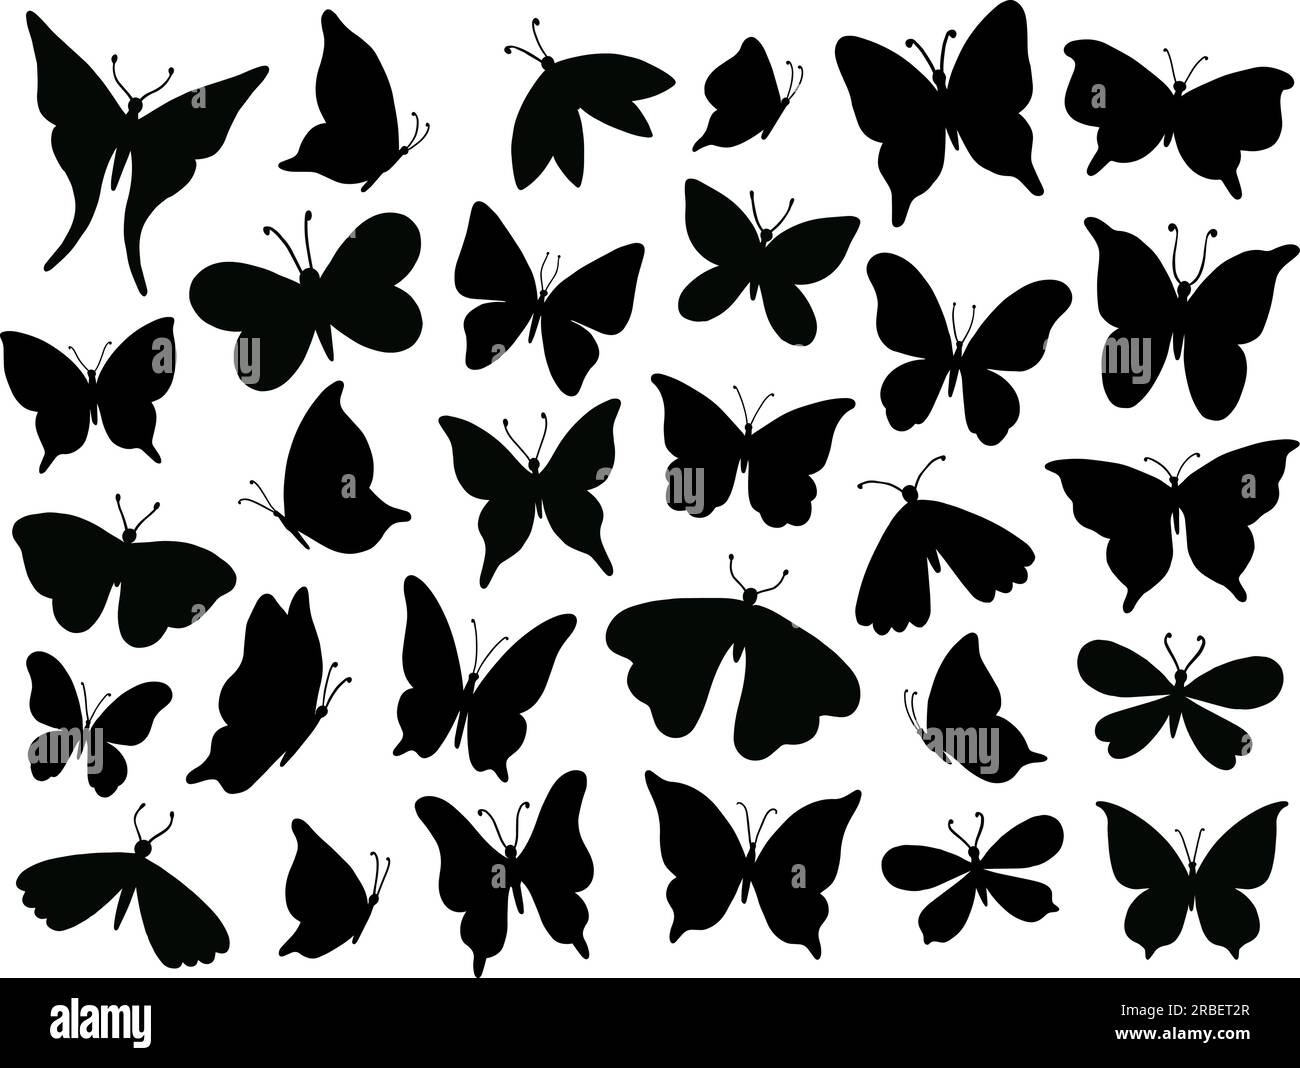 poner alas de mariposa. ilustración vectorial e iconos de contorno. 5666566  Vector en Vecteezy